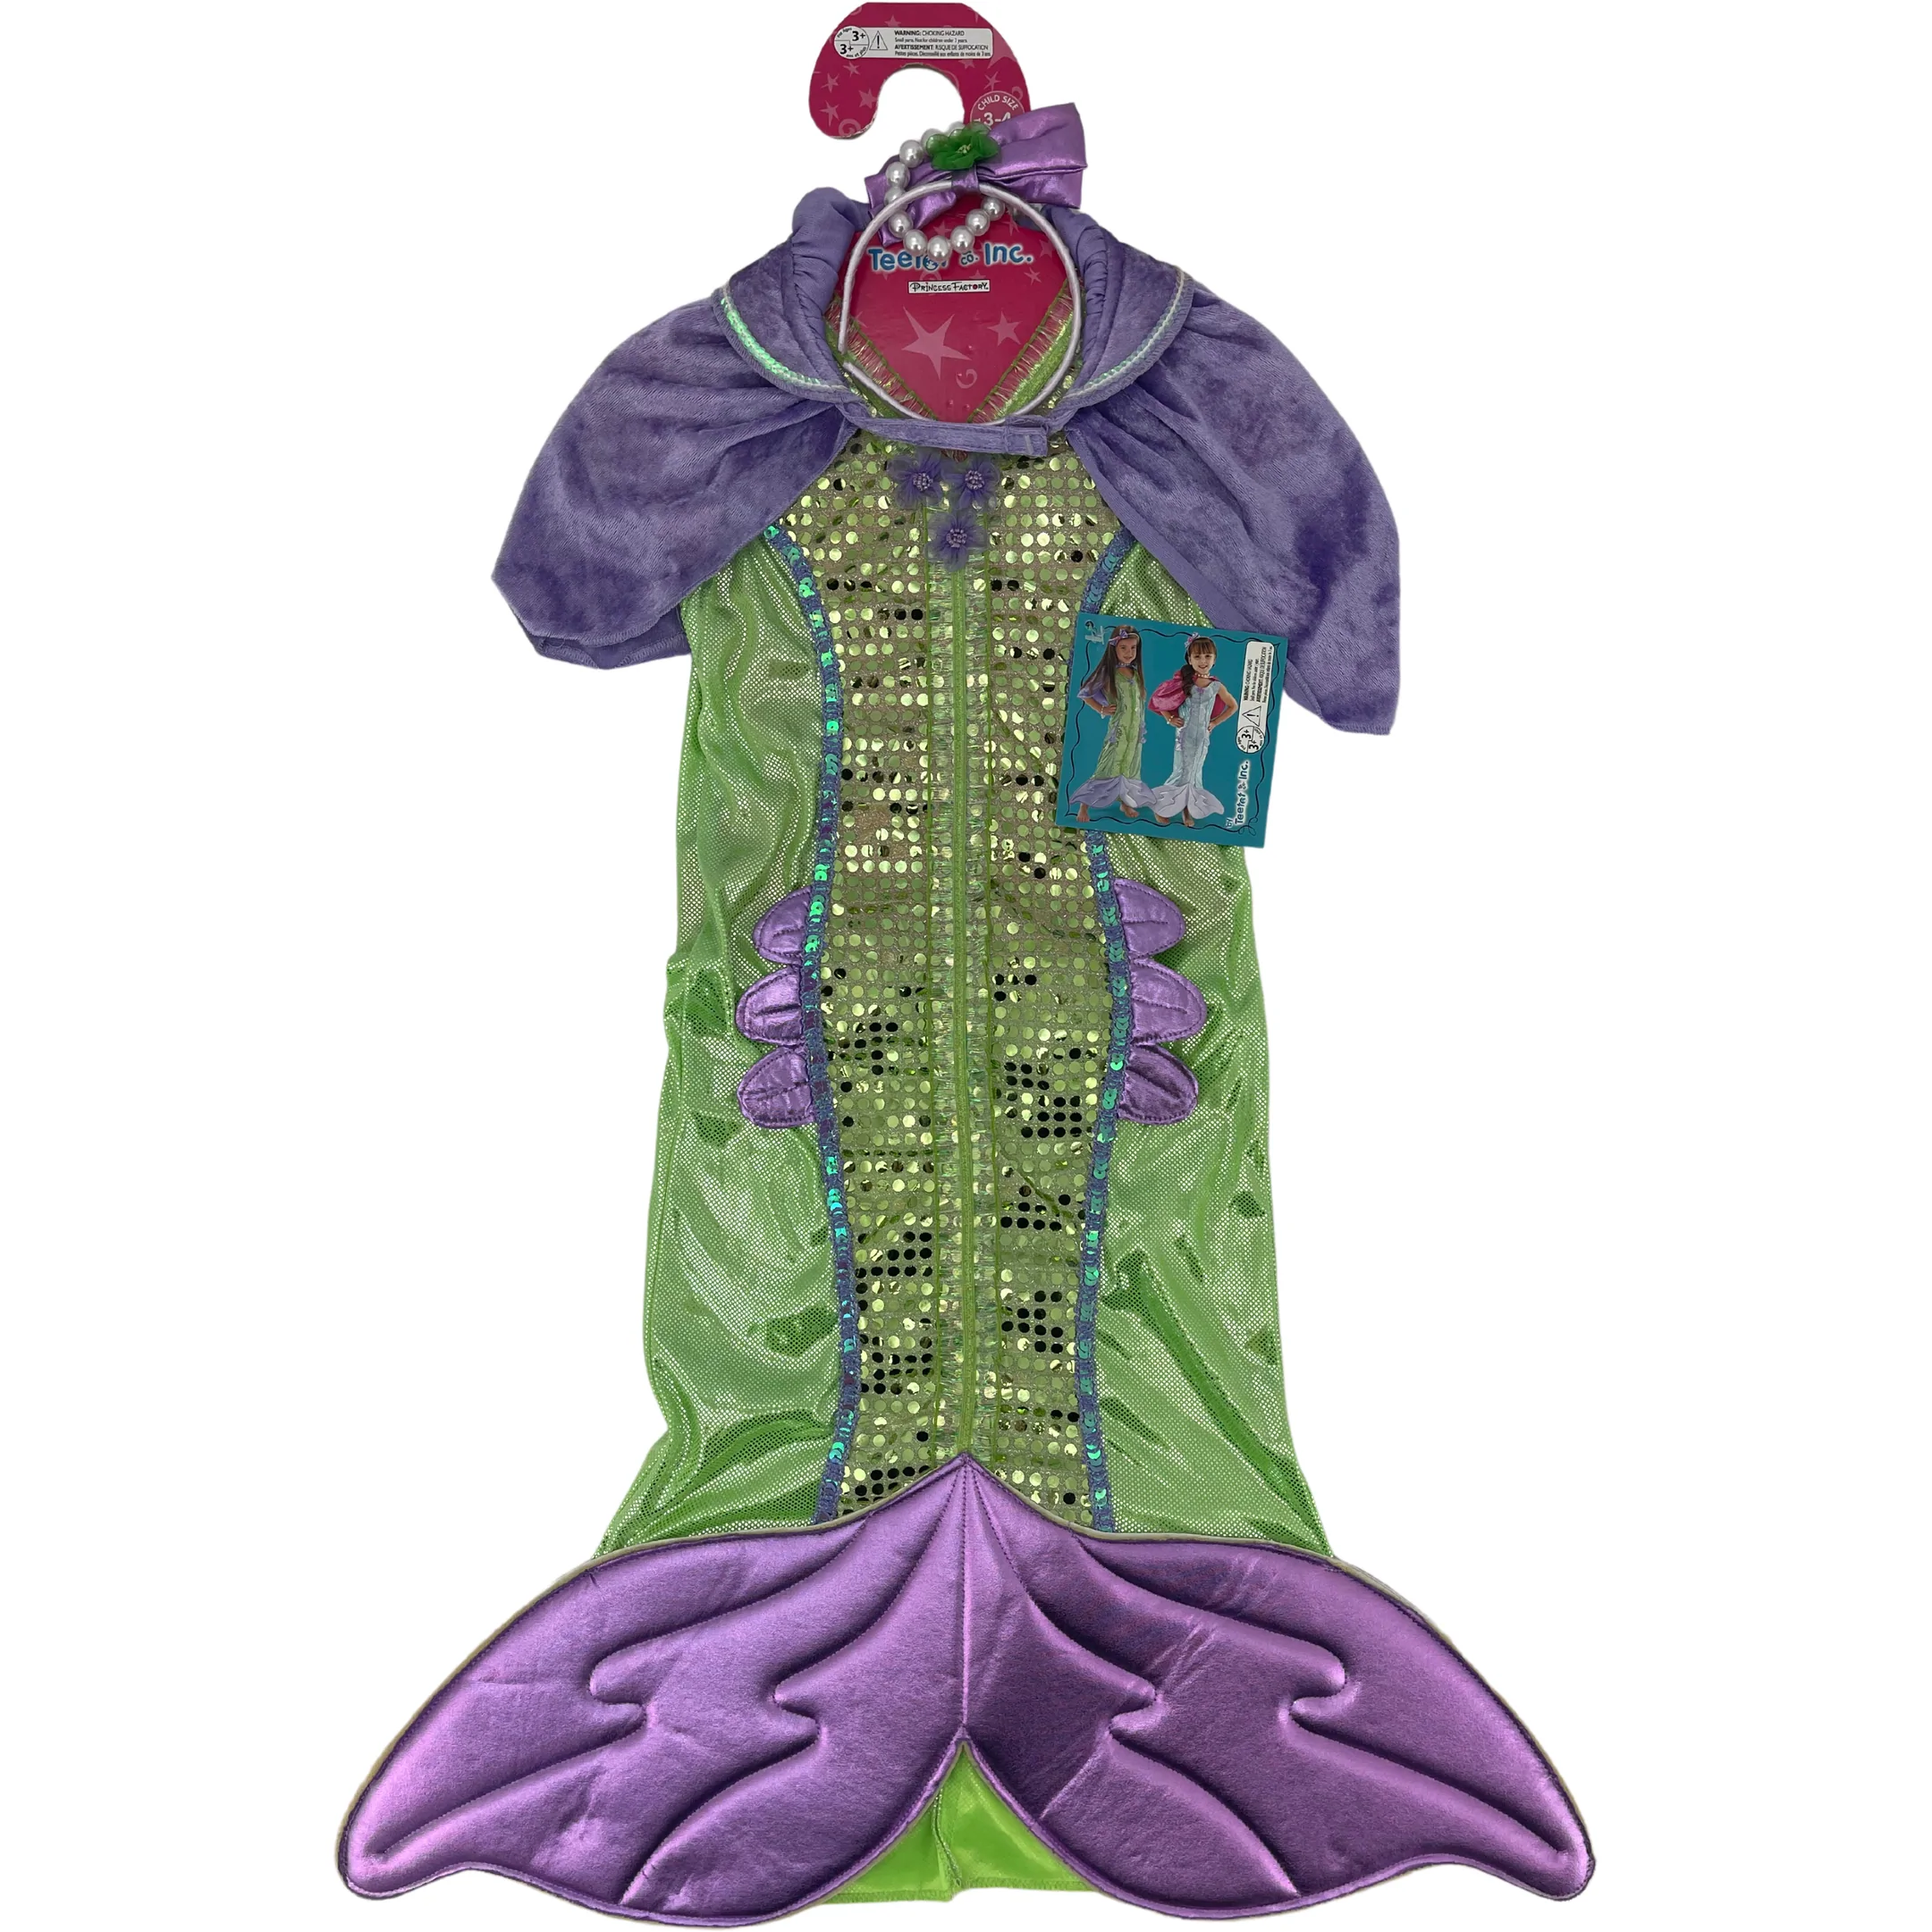 Teetot & Co Children's Halloween Costume / Mermaid / Pretend Play / Green and Purple / Size 3-4